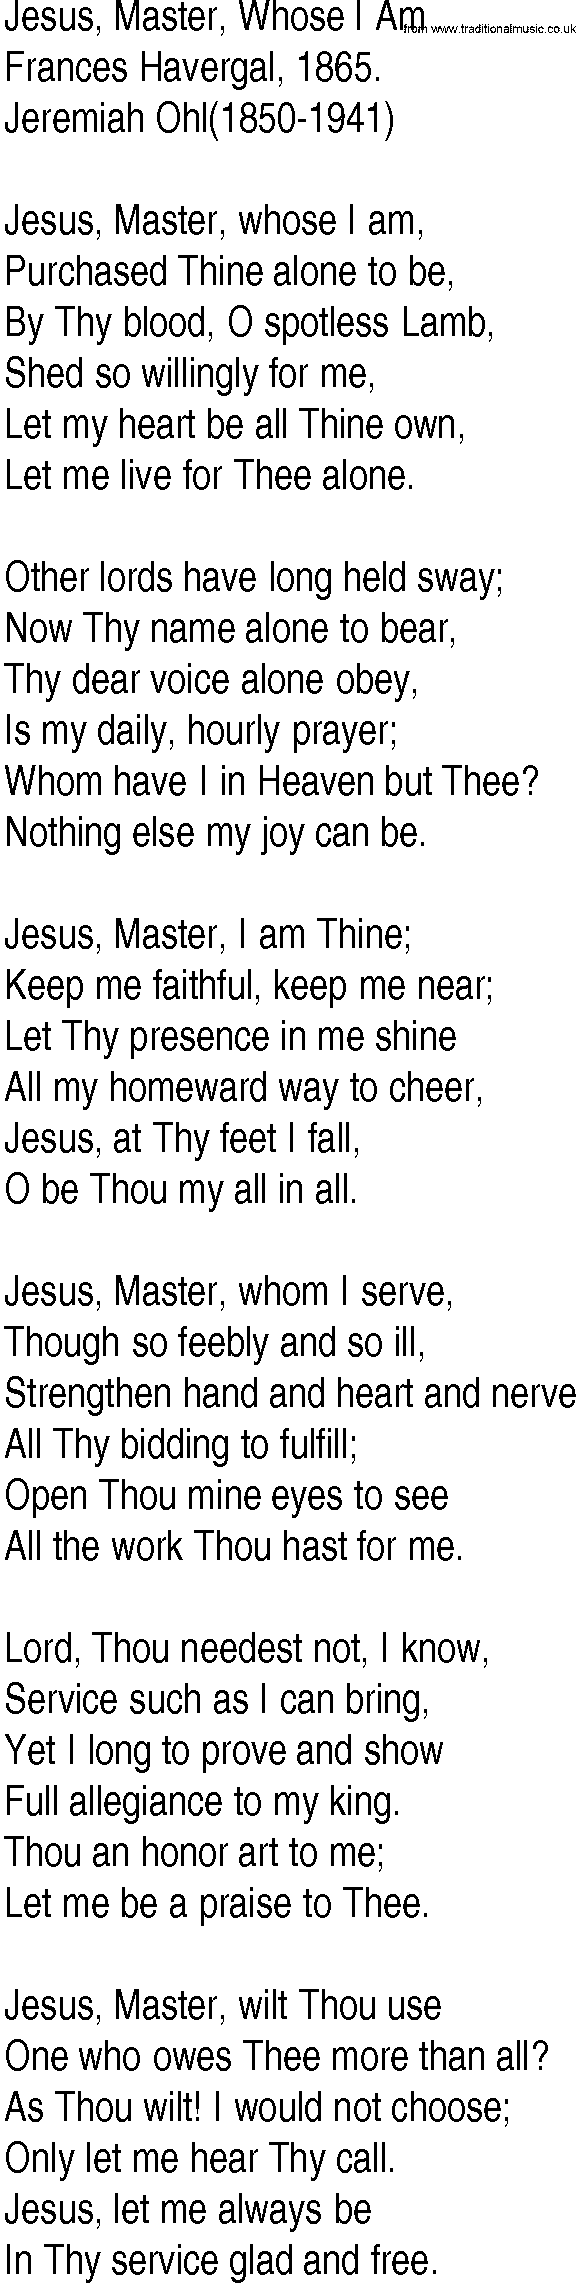 Hymn and Gospel Song: Jesus, Master, Whose I Am by Frances Havergal lyrics